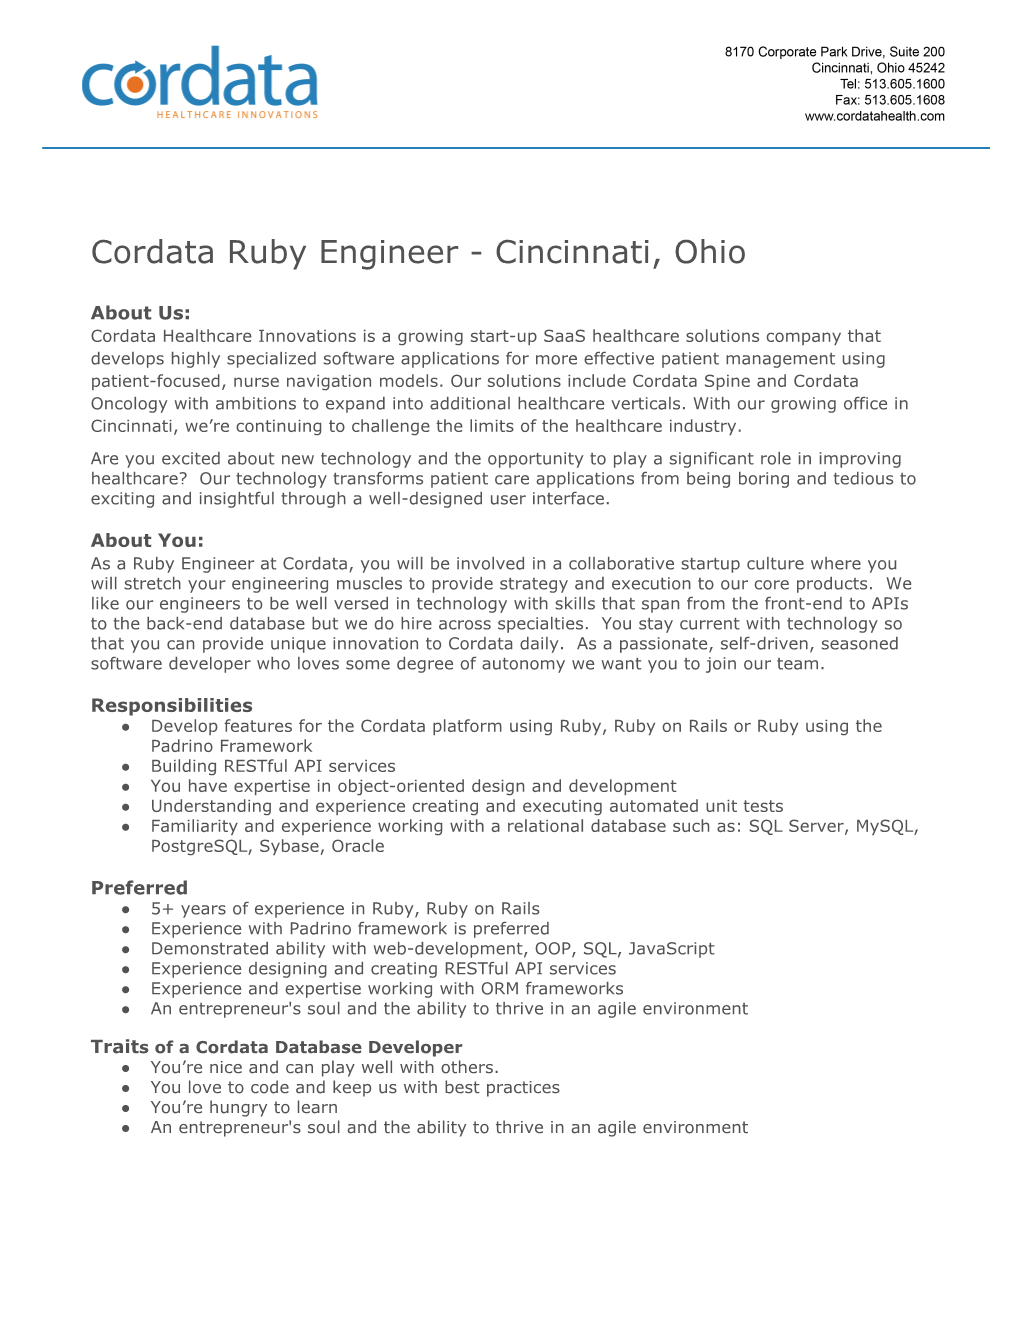 Cordata Ruby Engineer Cincinnati, Ohio